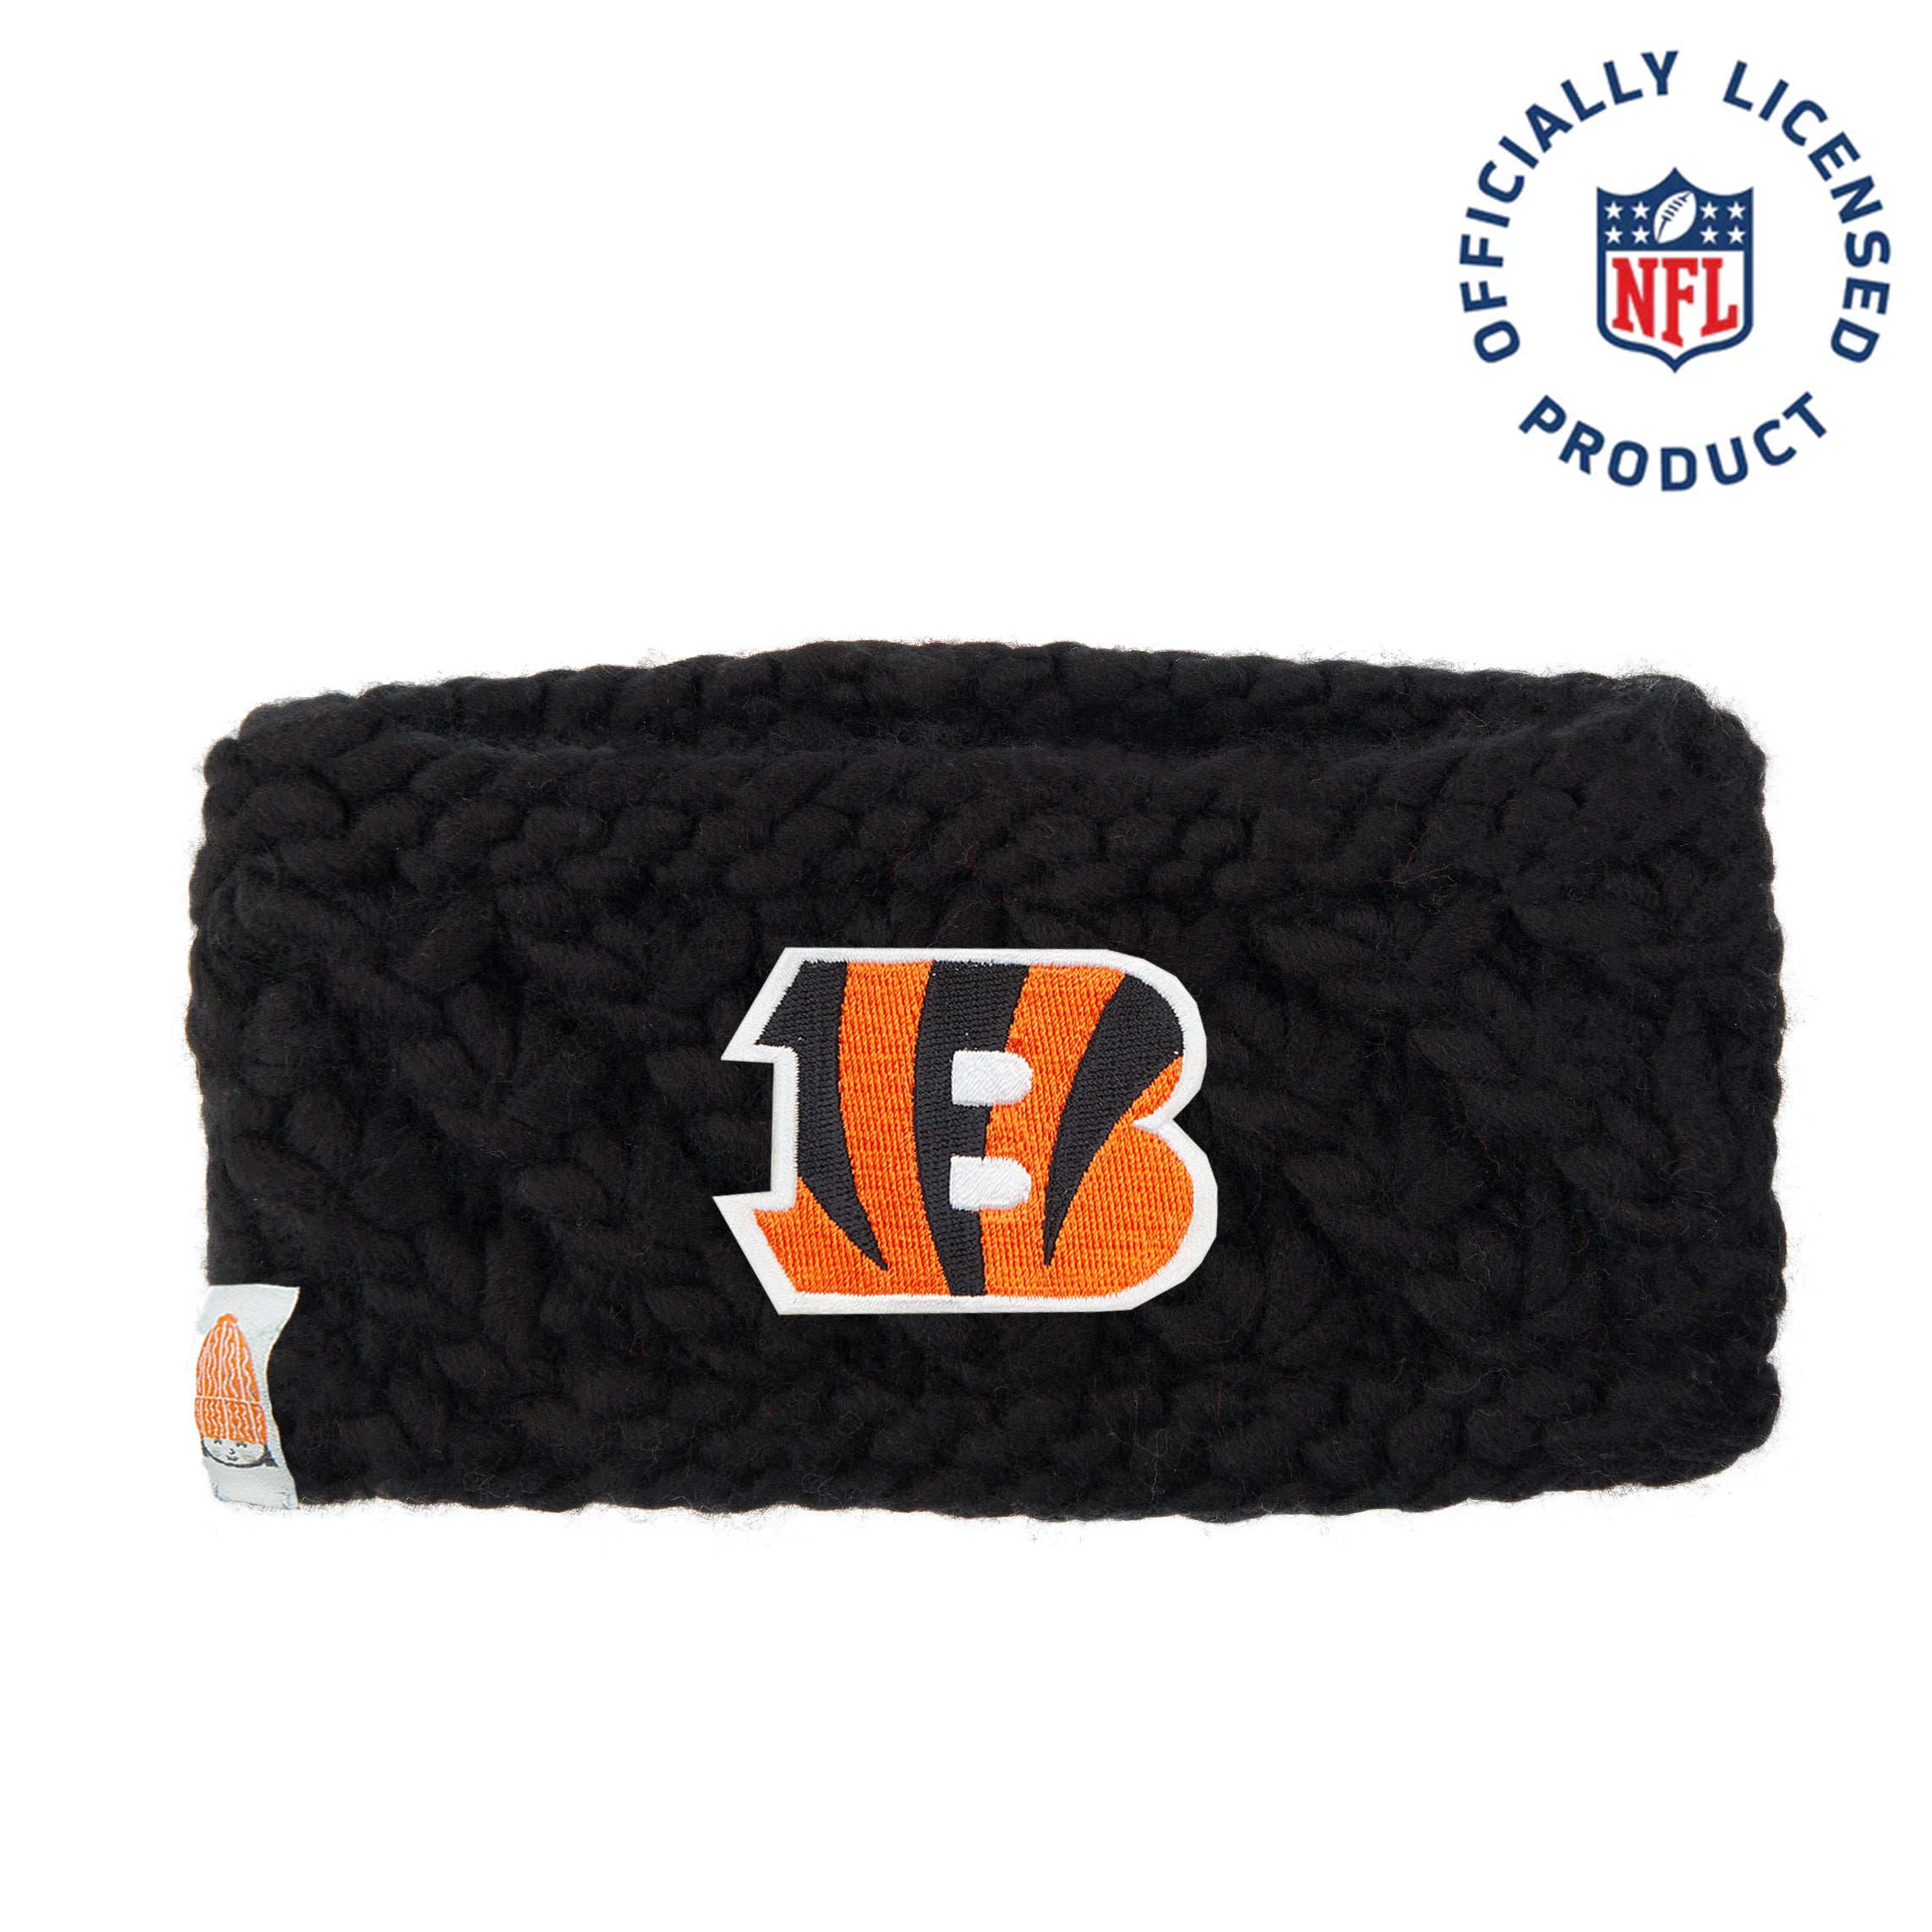 The Bengals Headband, NFL Winter Accessories